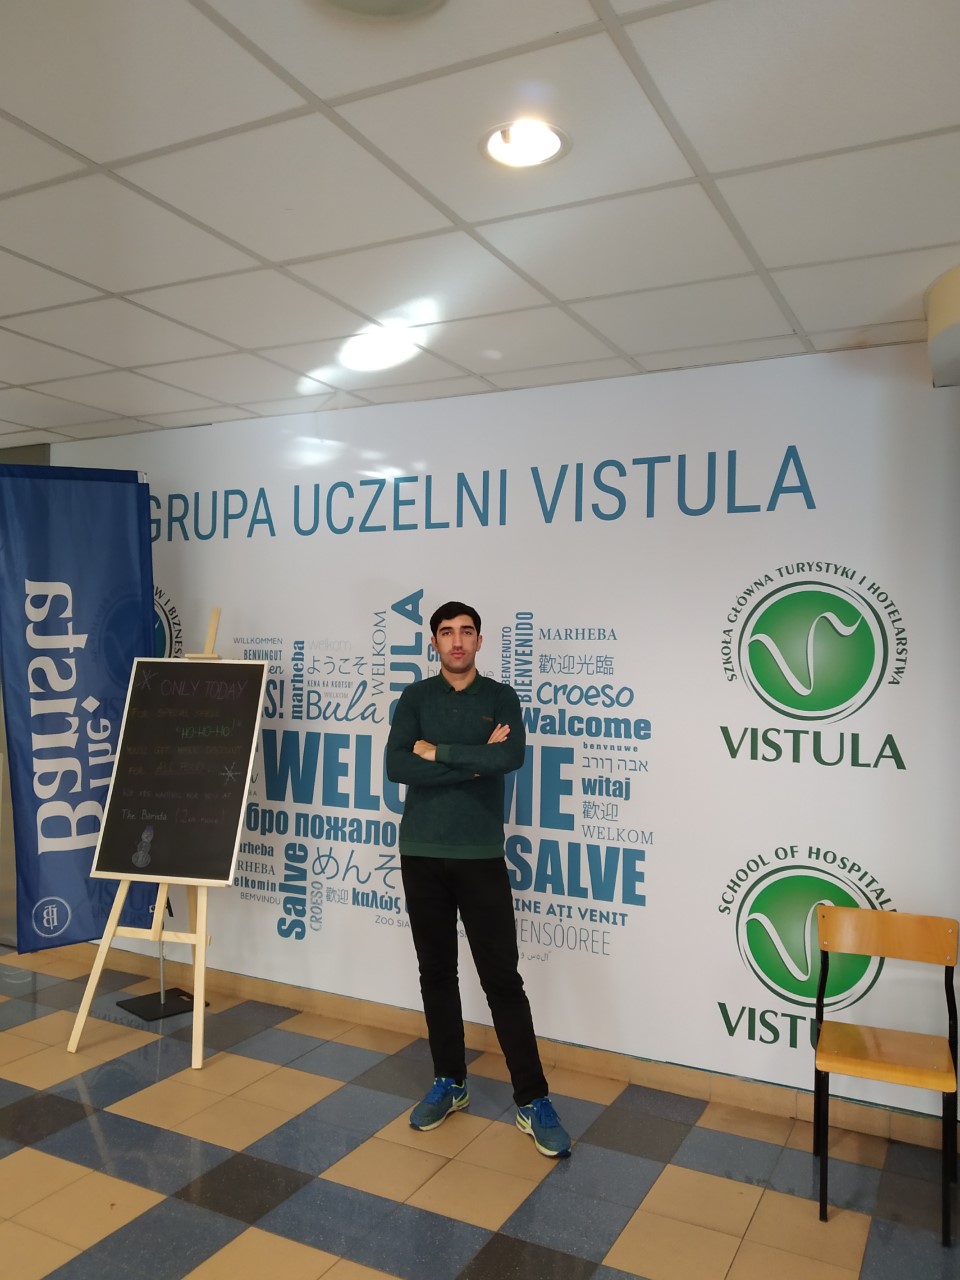 BMU məzunu nüfuzlu Vistula Universitetində!